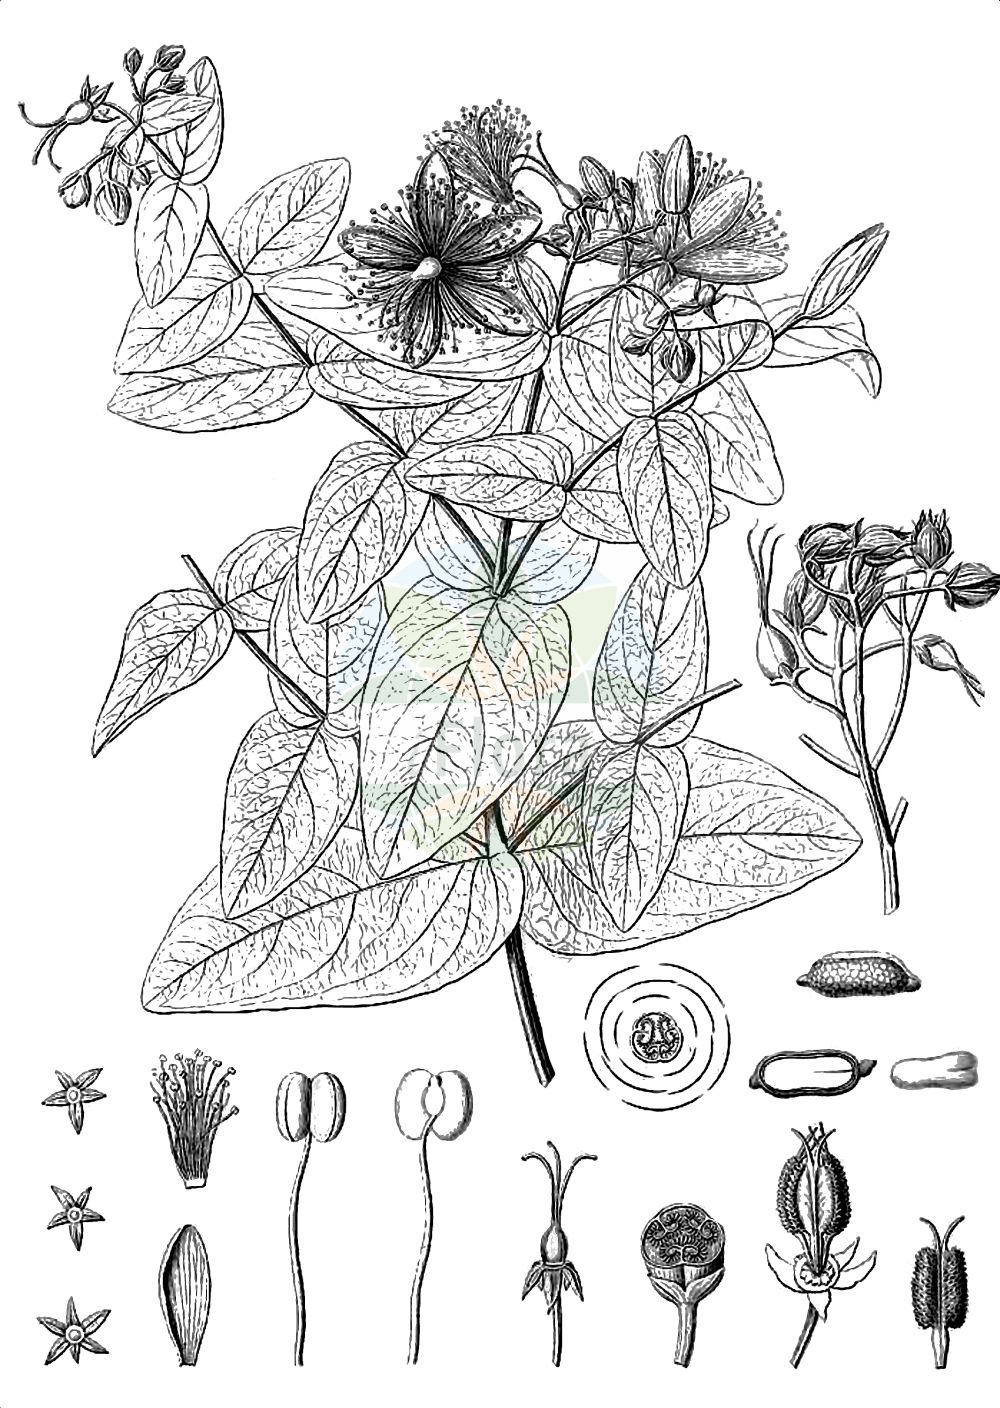 Historische Abbildung von Hypericum calycinum (Rose-of-Sharon). Das Bild zeigt Blatt, Bluete, Frucht und Same. ---- Historical Drawing of Hypericum calycinum (Rose-of-Sharon). The image is showing leaf, flower, fruit and seed.(Hypericum calycinum,Rose-of-Sharon,Hypericum calycinum,Hypericum grandiflorum,Hypericum,Johanniskraut,St. John's Wort,Hypericaceae,Hartheugewächse,St. John's Wort family,Blatt,Bluete,Frucht,Same,leaf,flower,fruit,seed,Webb et al. (1836-1847))